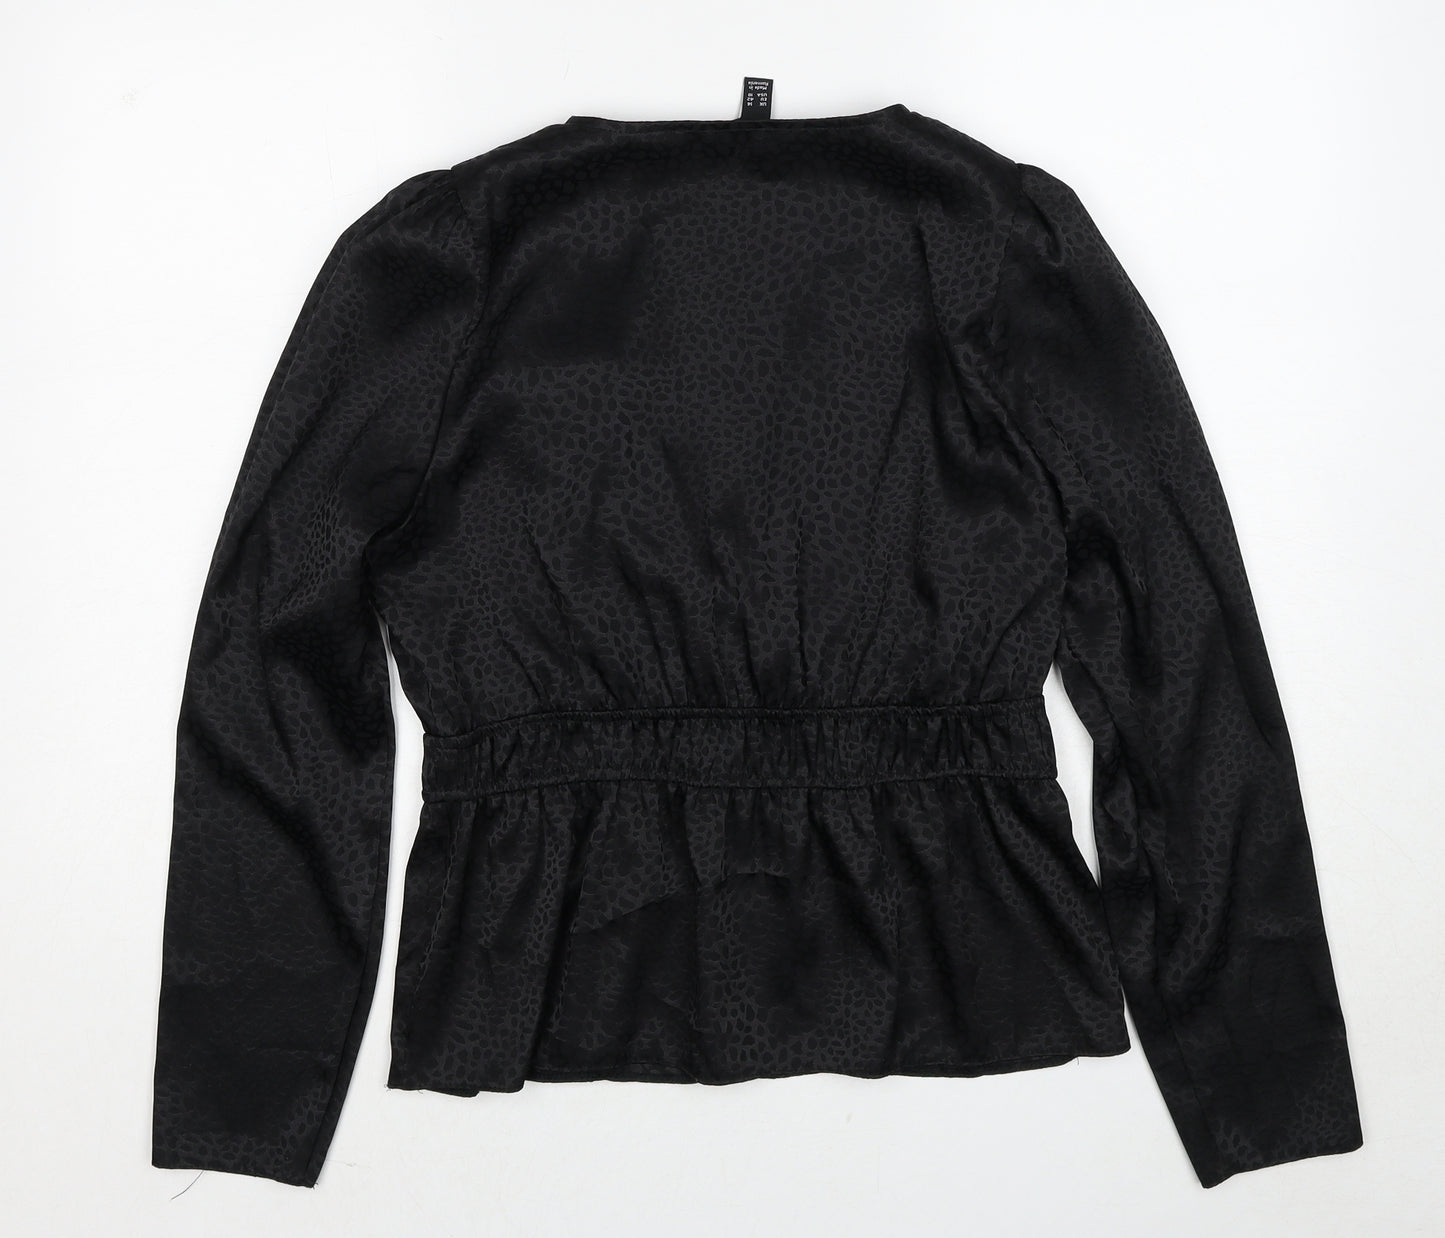 New Look Womens Black Geometric Polyester Basic Blouse Size 14 V-Neck